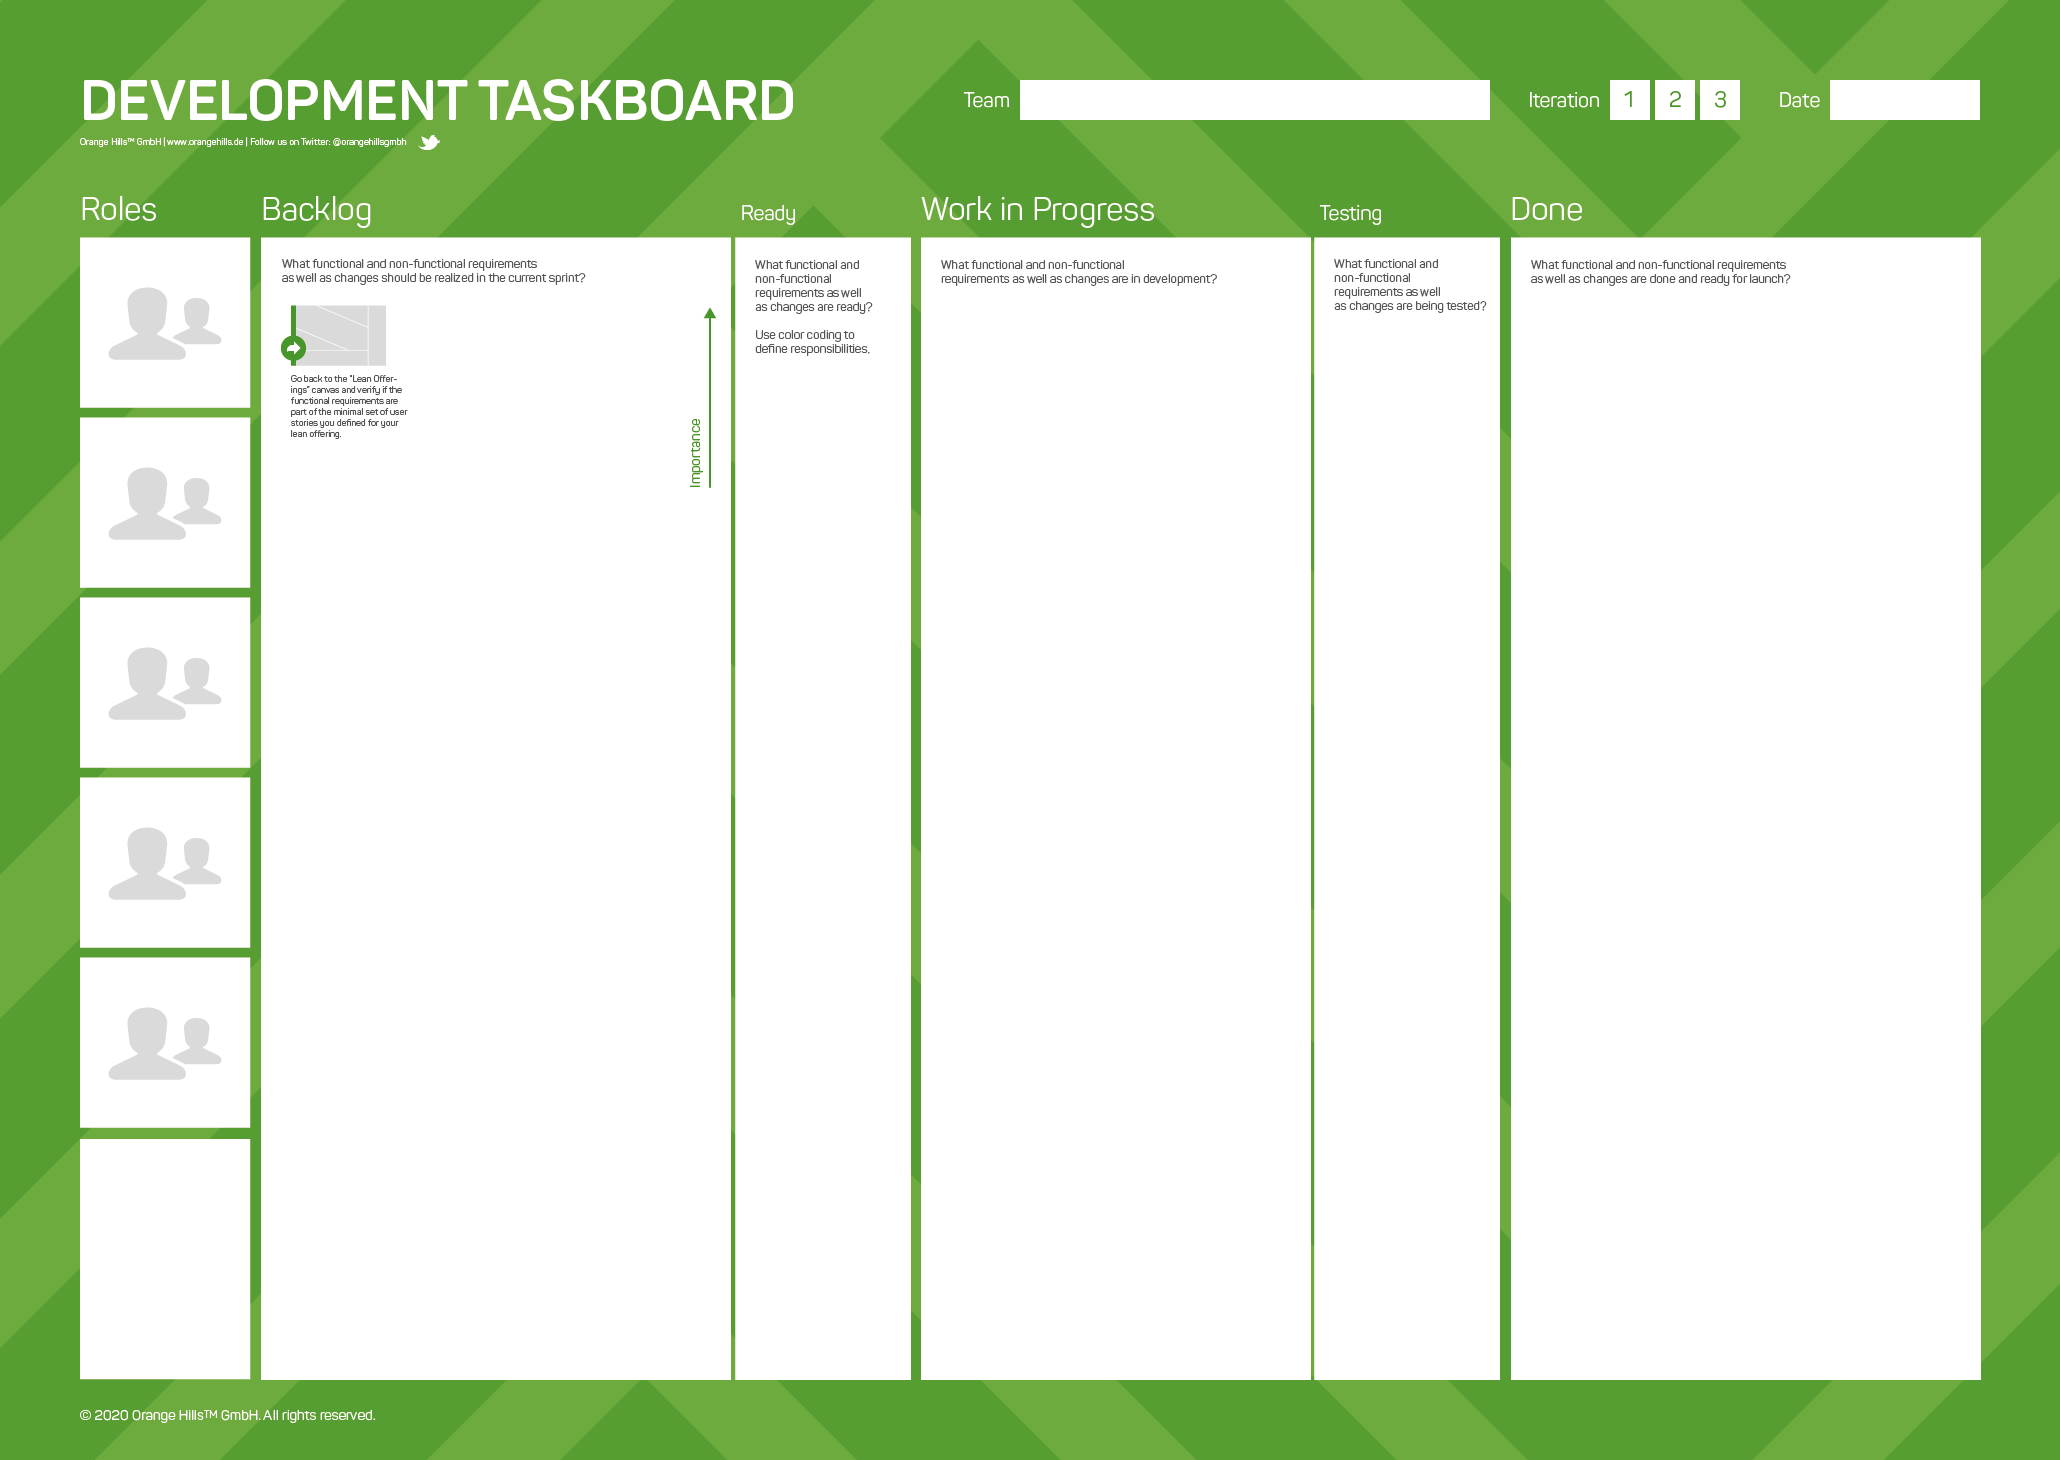 Development Taskboard